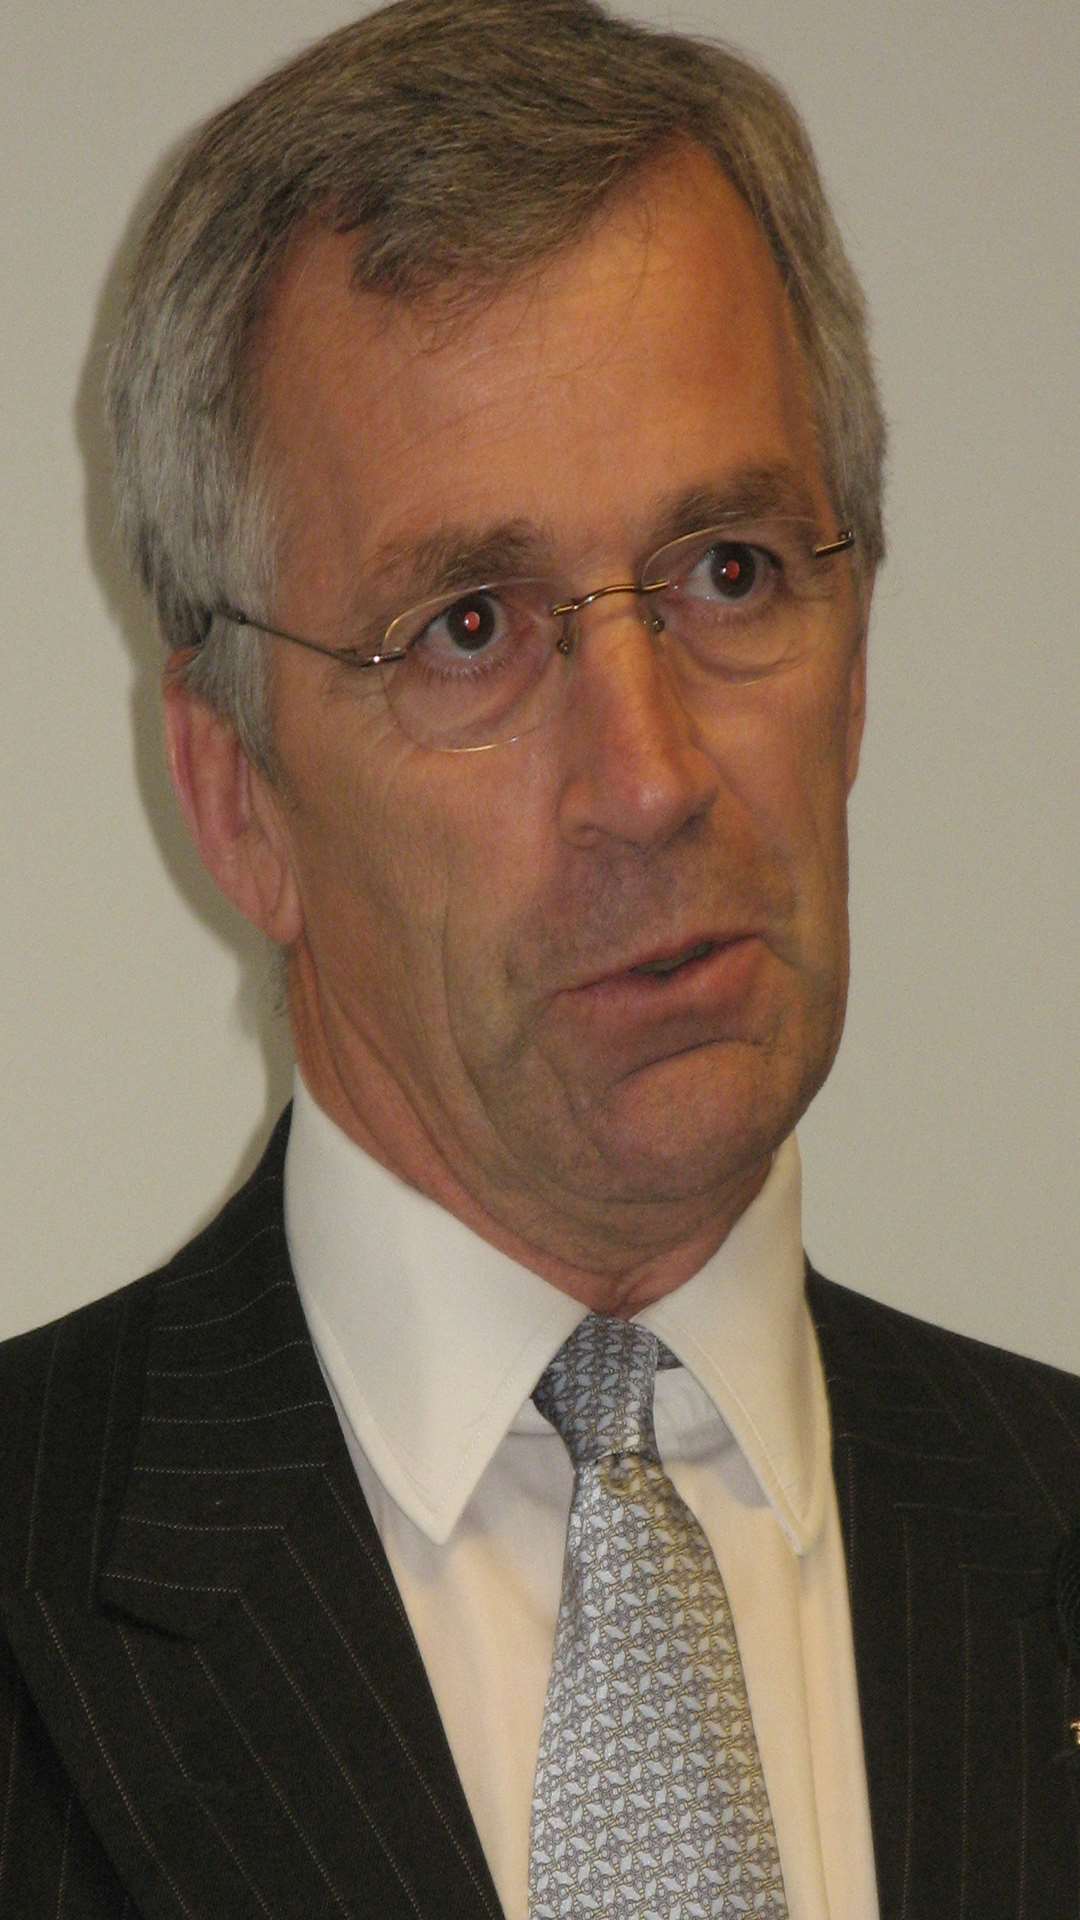 Richard Ashworth MEP